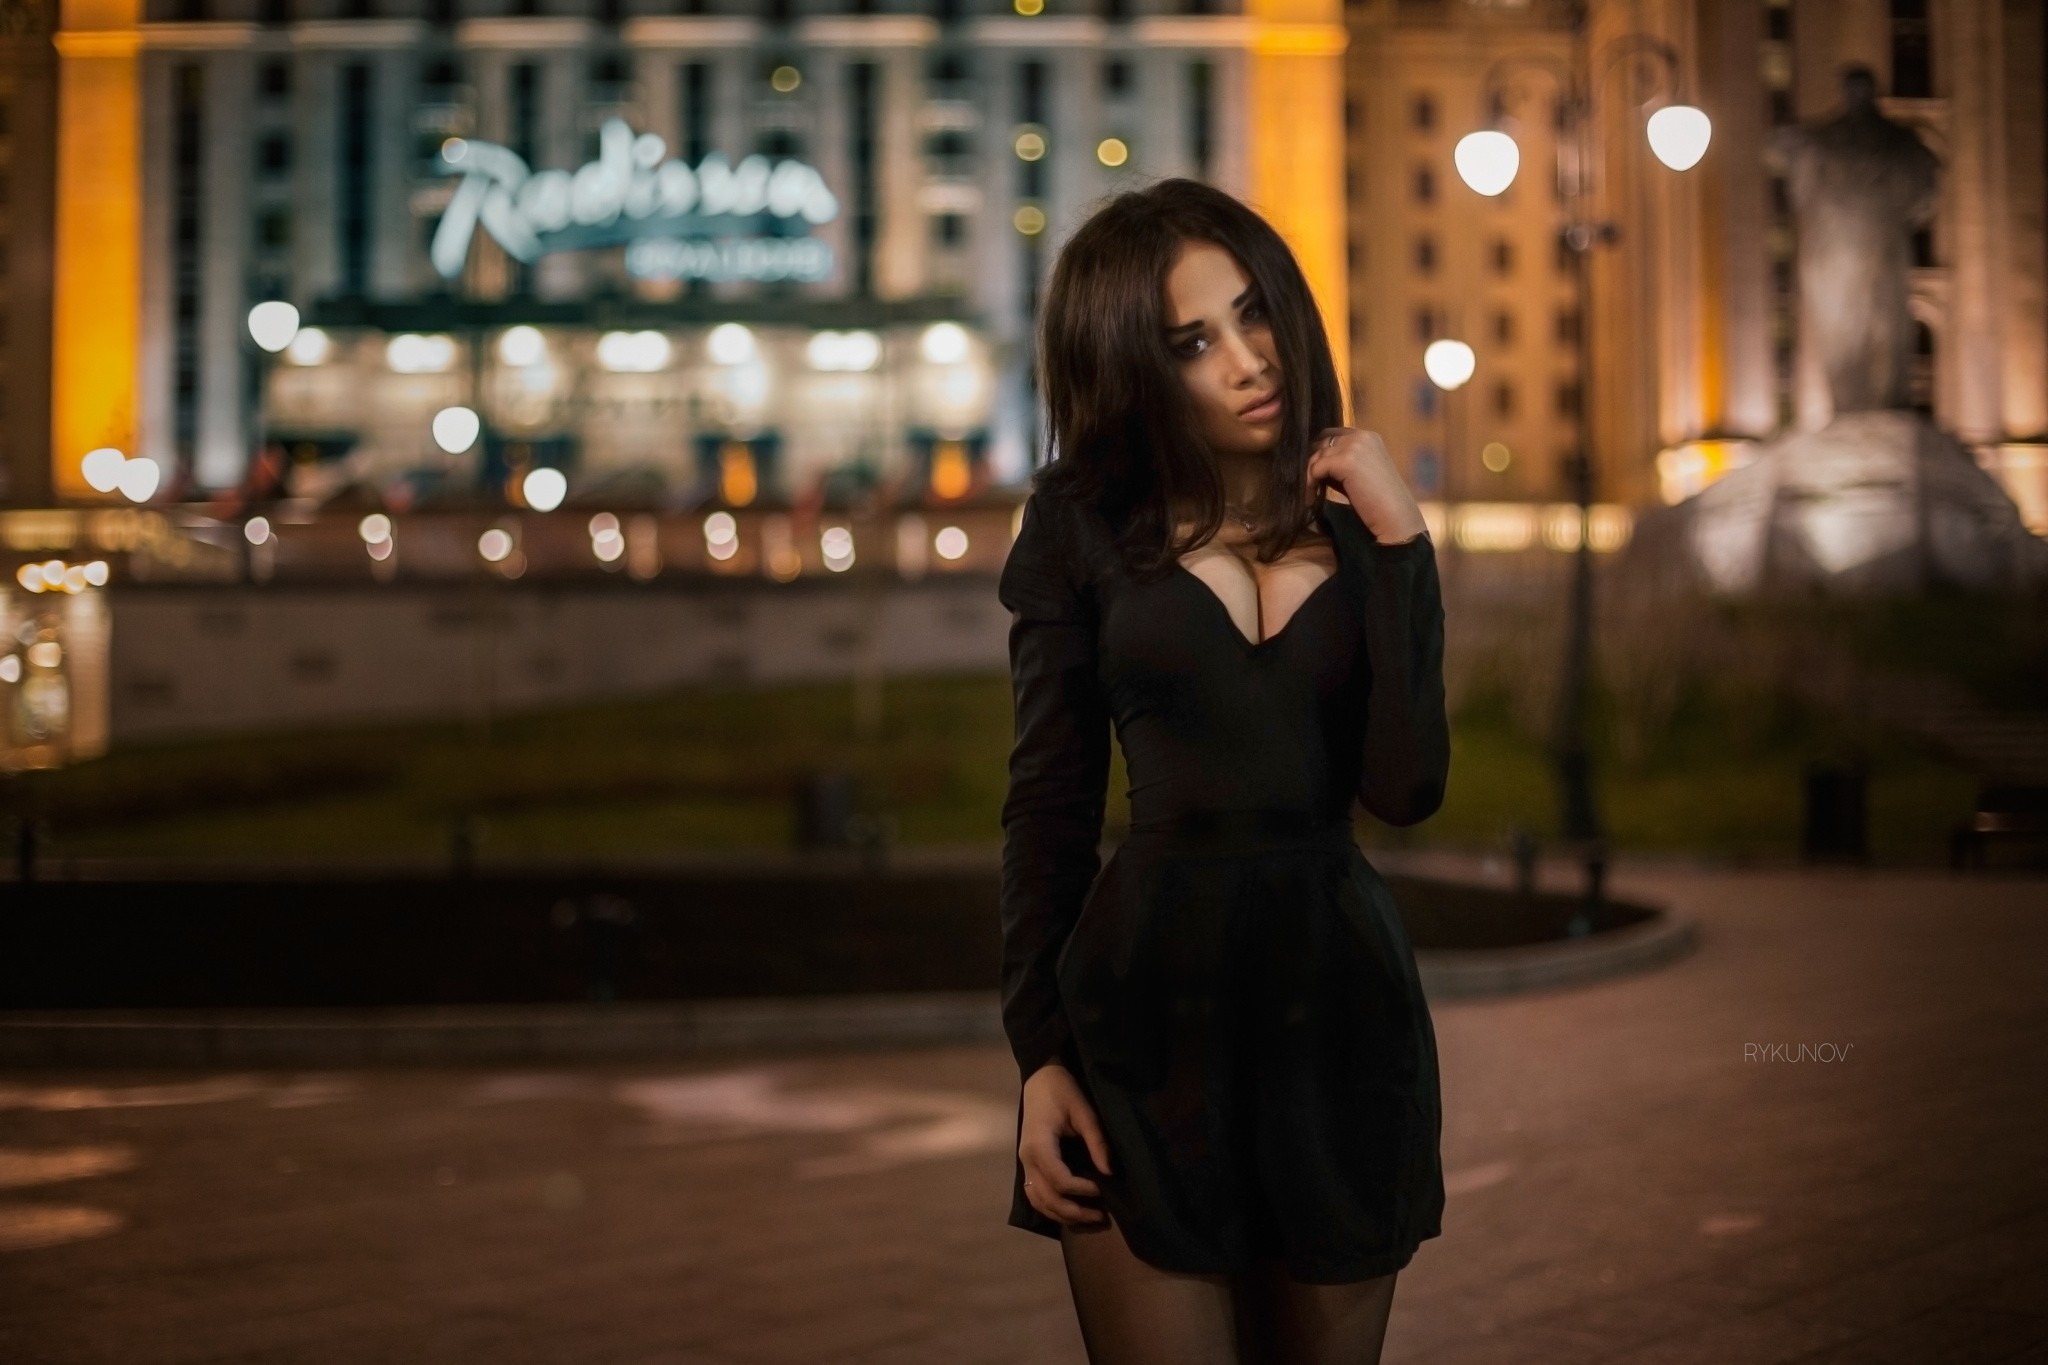 People 2048x1365 women cleavage black dress black clothing women outdoors urban brunette standing model looking at viewer Rykunov